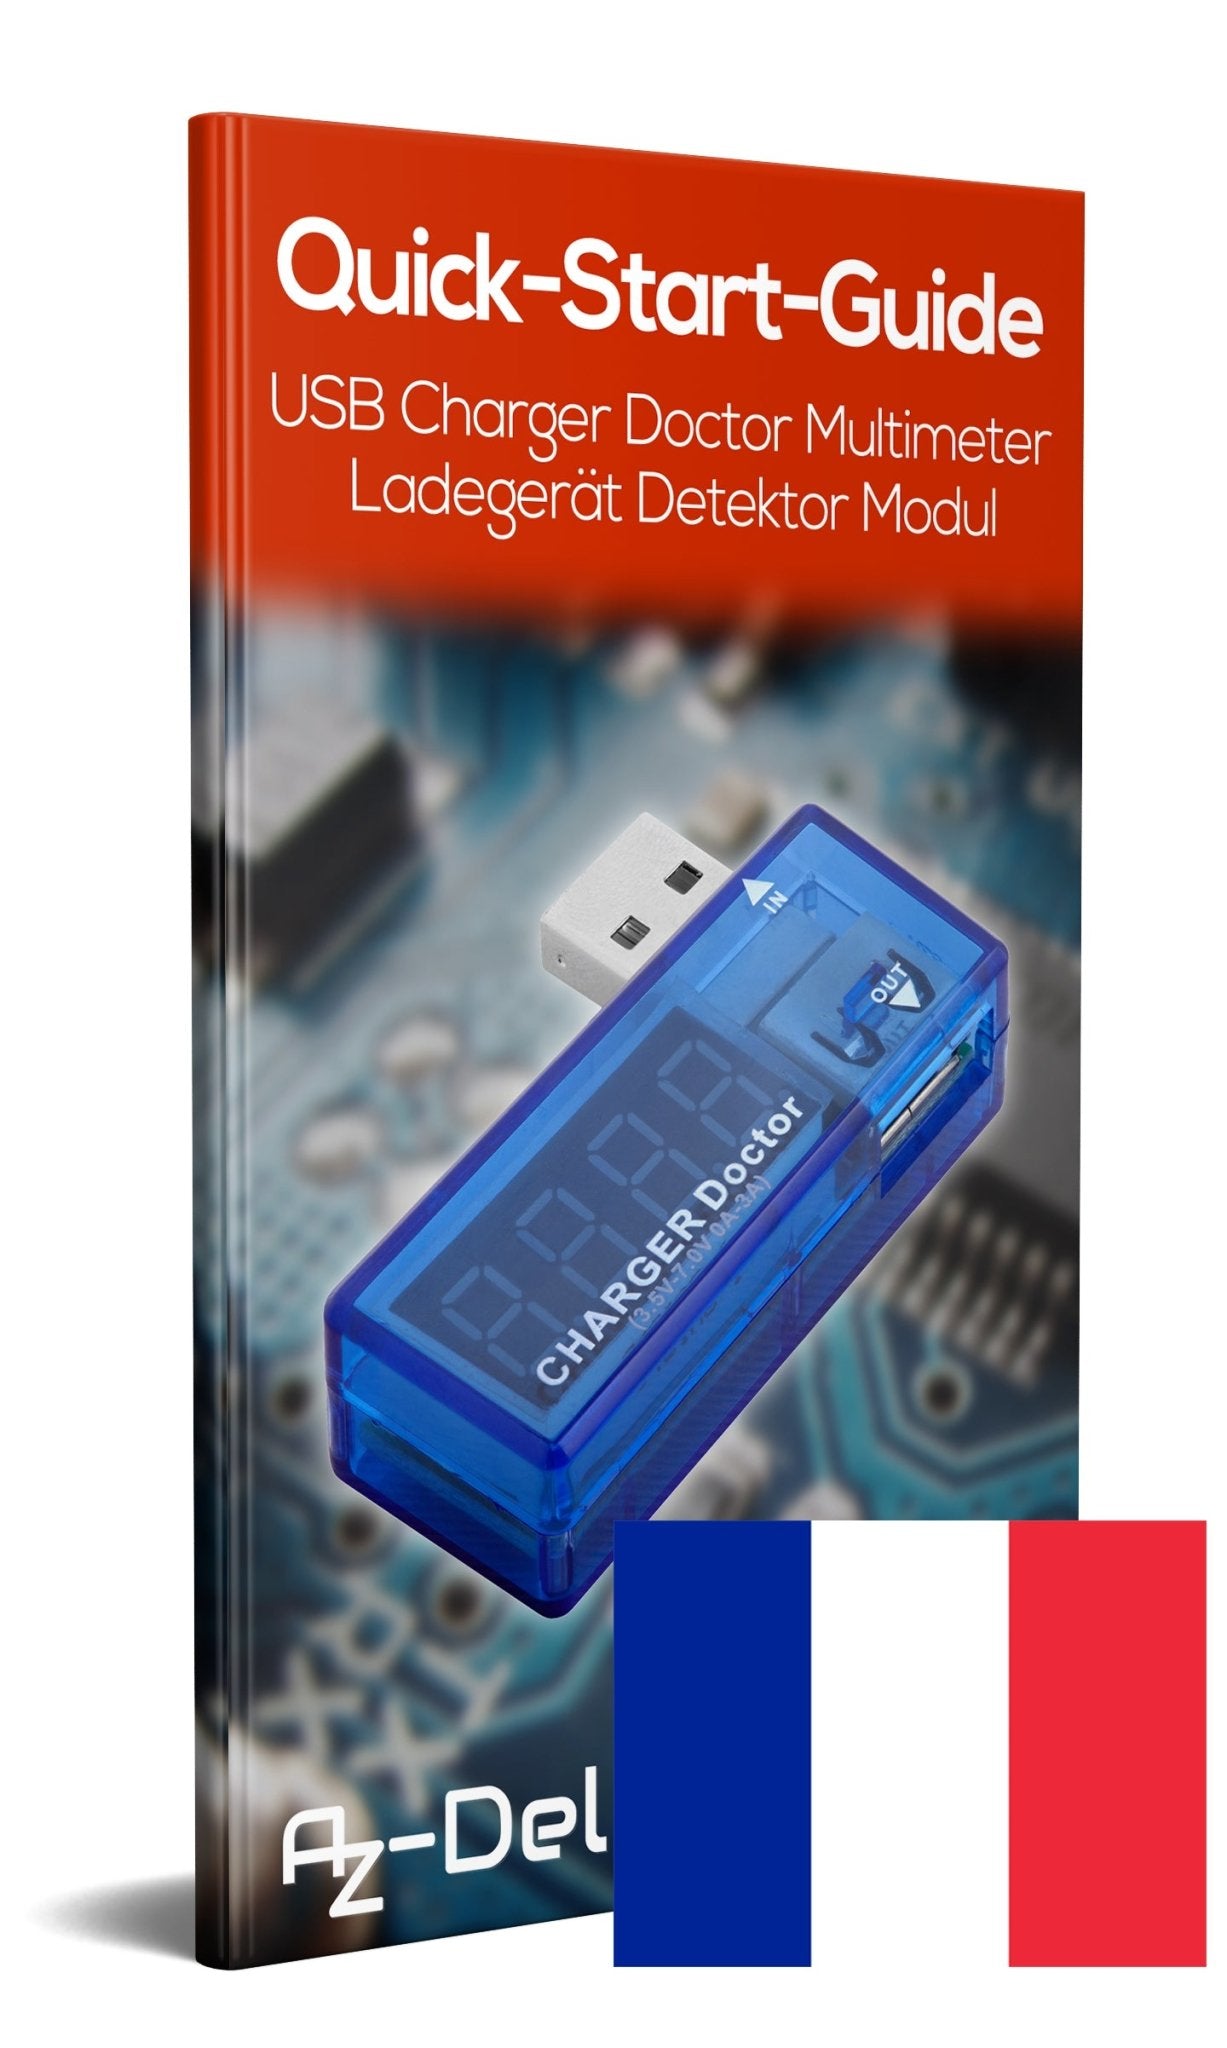 USB Charger Doctor Multimeter Ladegerät Detektor Stromverbrauchsmesser Spannungsmesser Digitaler Voltmeter - AZ-Delivery